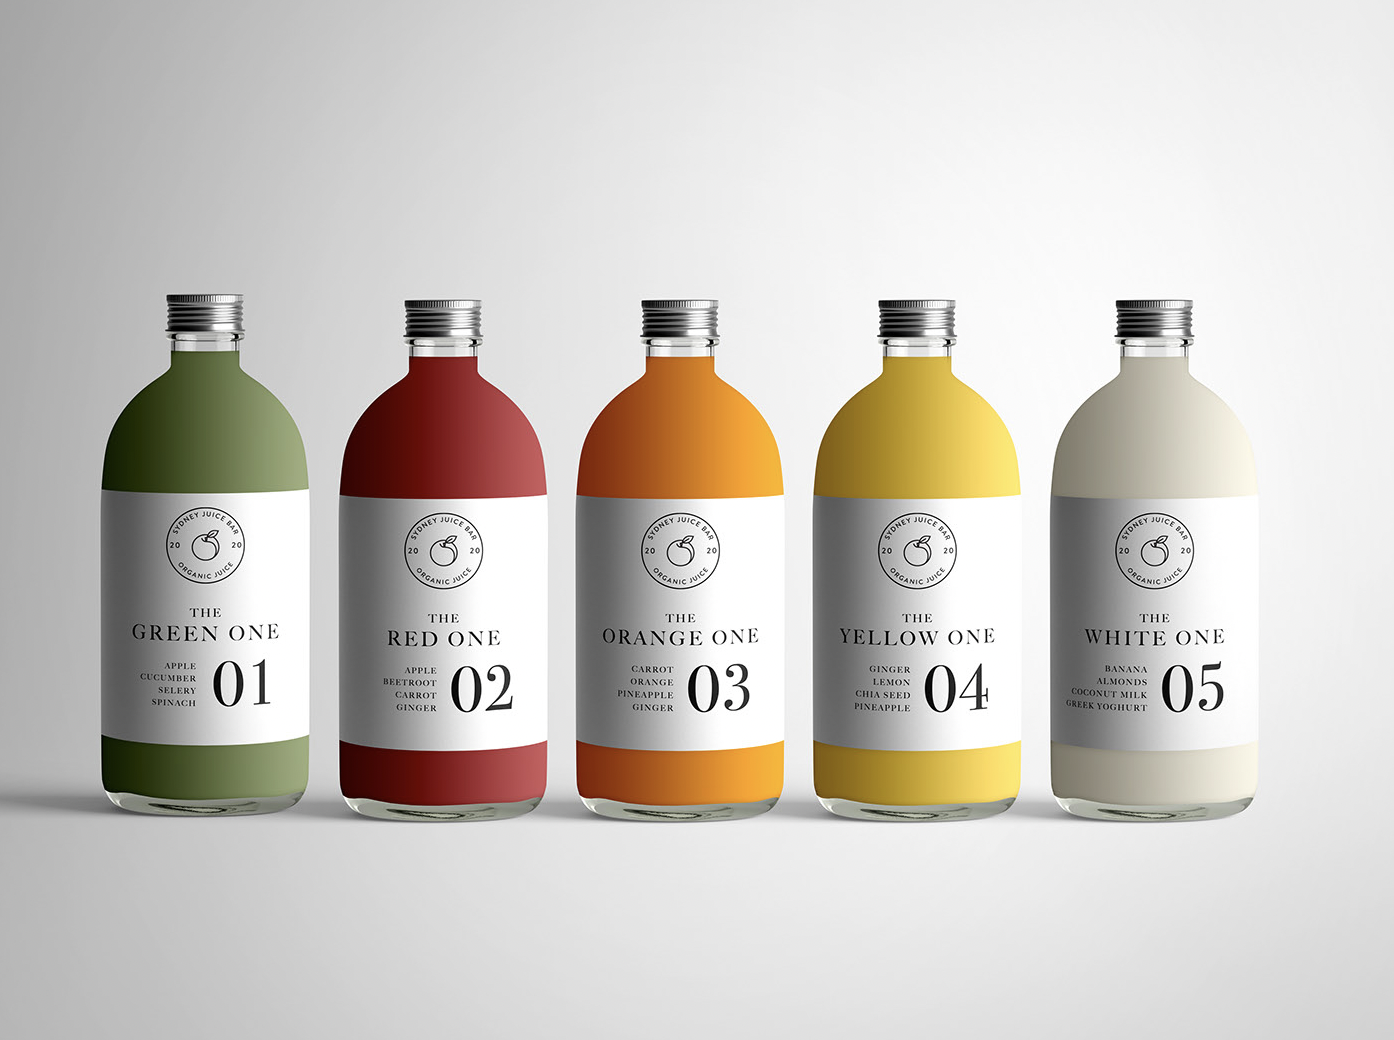 Juice Bottle Design Trends